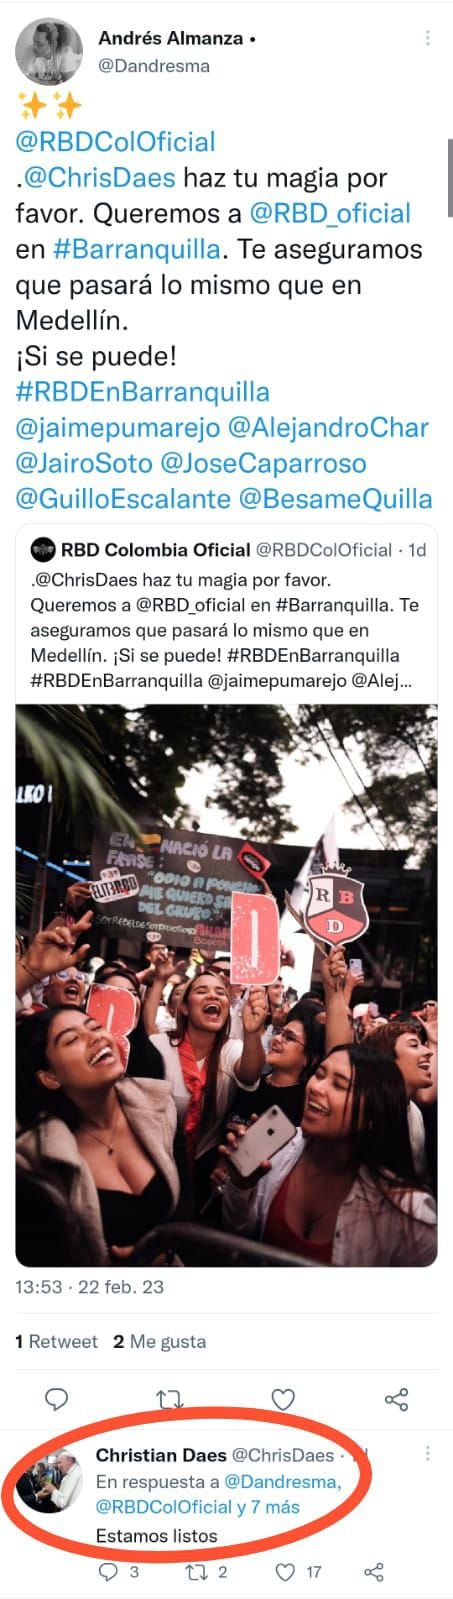 Christian Daes responde etiquetas en Twitter e ilusiona a los barranquilleros con  posible concierto de RBD. / Foto @Dandresma